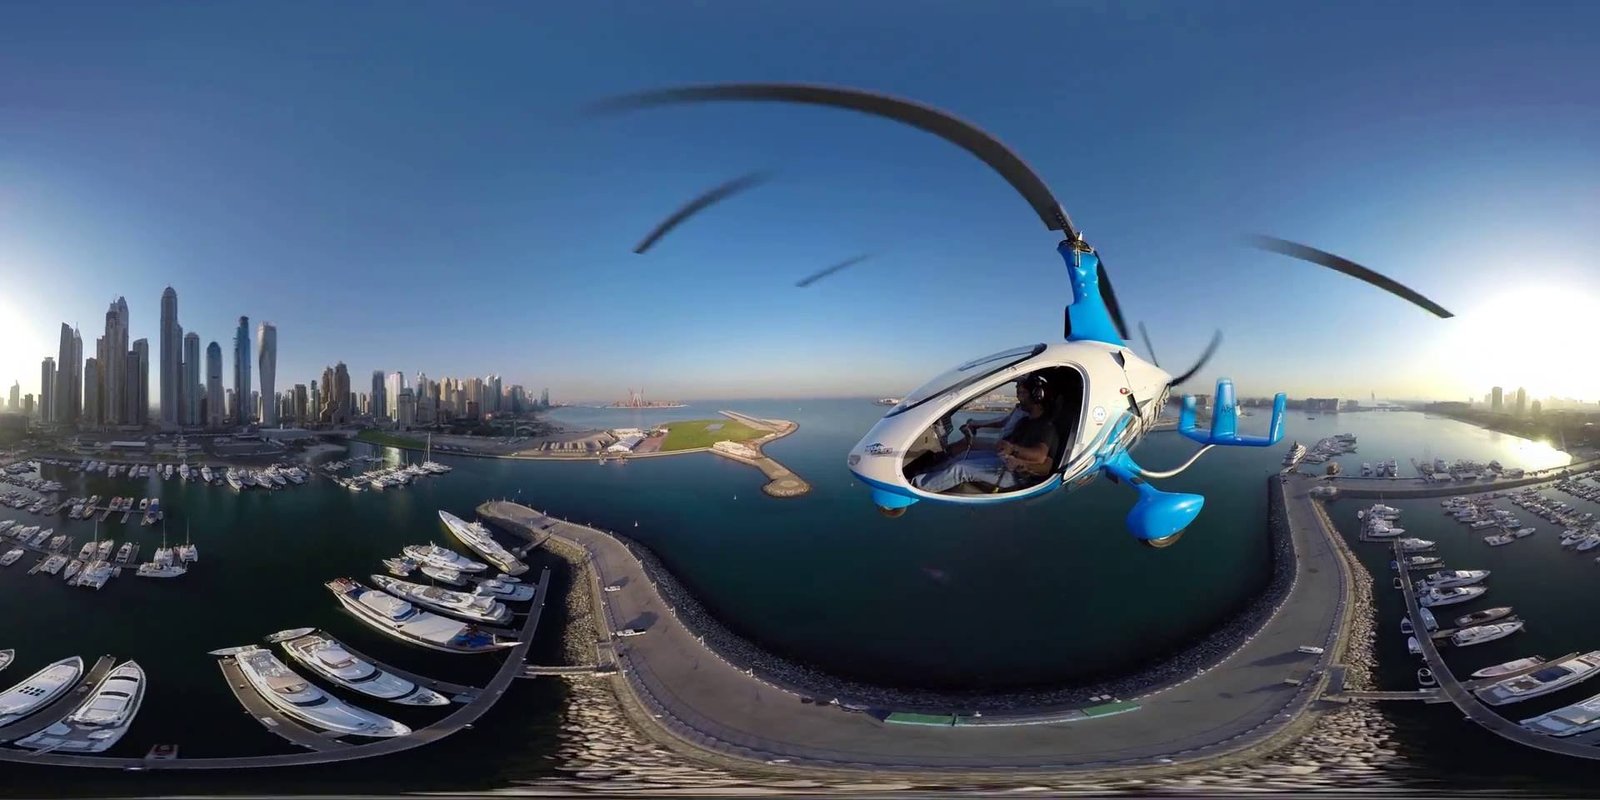 dubai helicoptero - FANT360 - Fantástico cria projeto 360